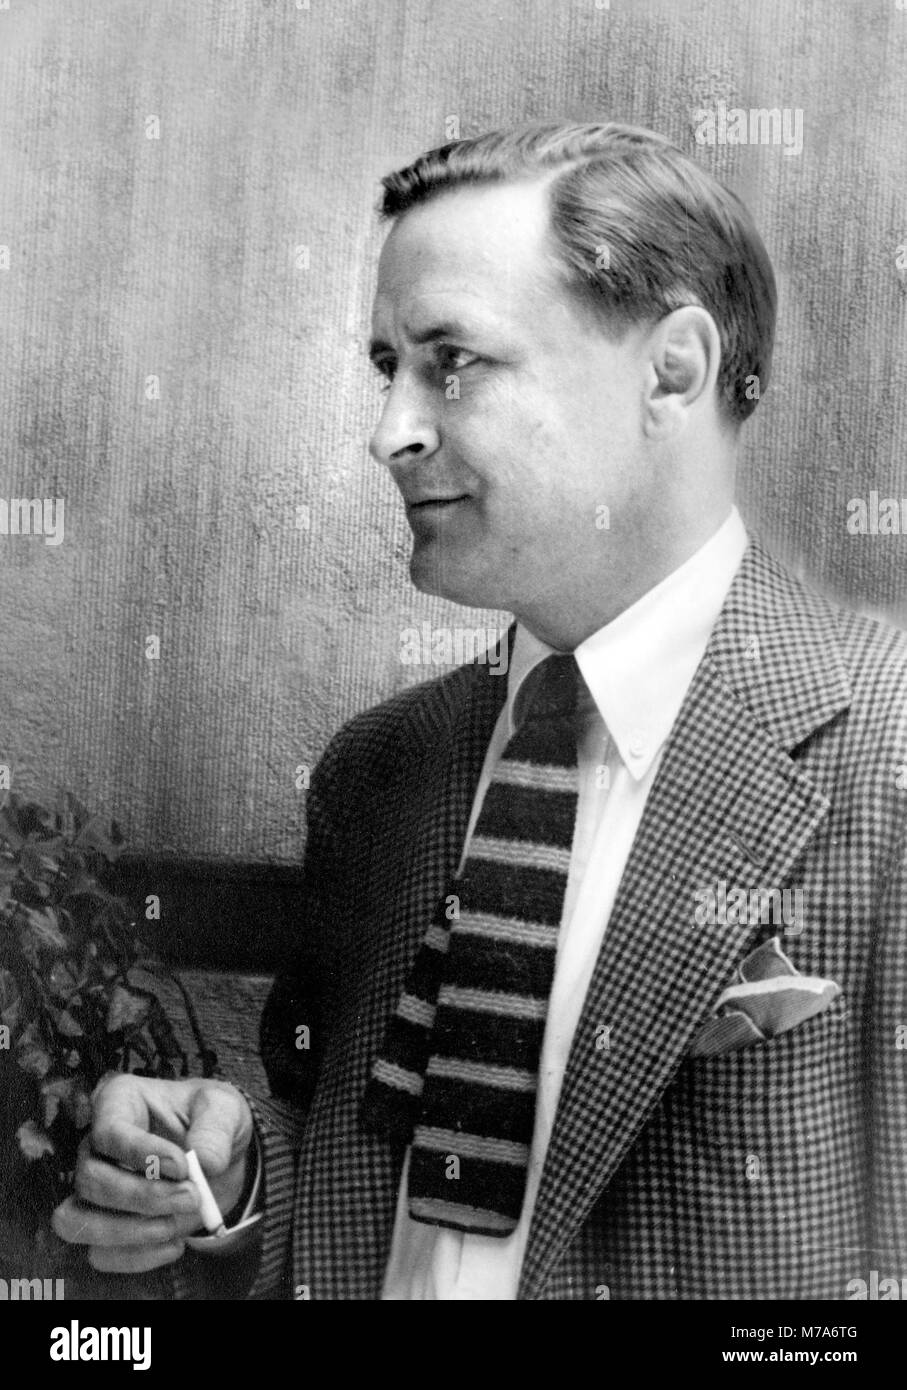 F Scott Fitzgerald. Portrait of the American author, Francis Scott Key Fitzgerald (1896-1940) by Carl Van Vechten, 1937. Stock Photo